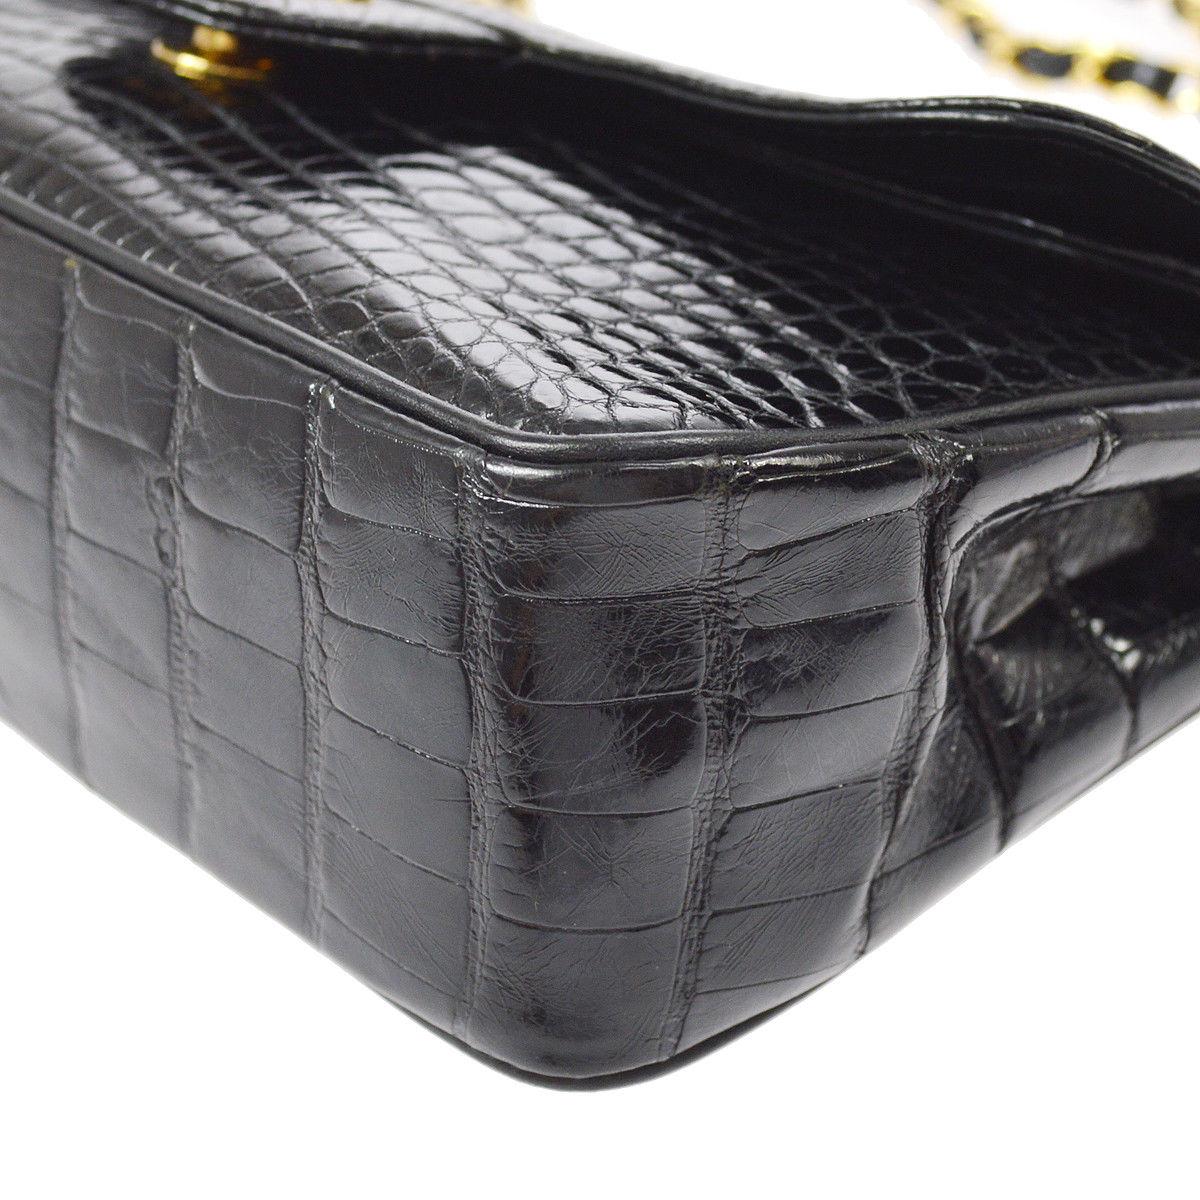 Chanel Black Crocodile Leather Gold Turnlock Evening Clutch Flap Shoulder Bag 2